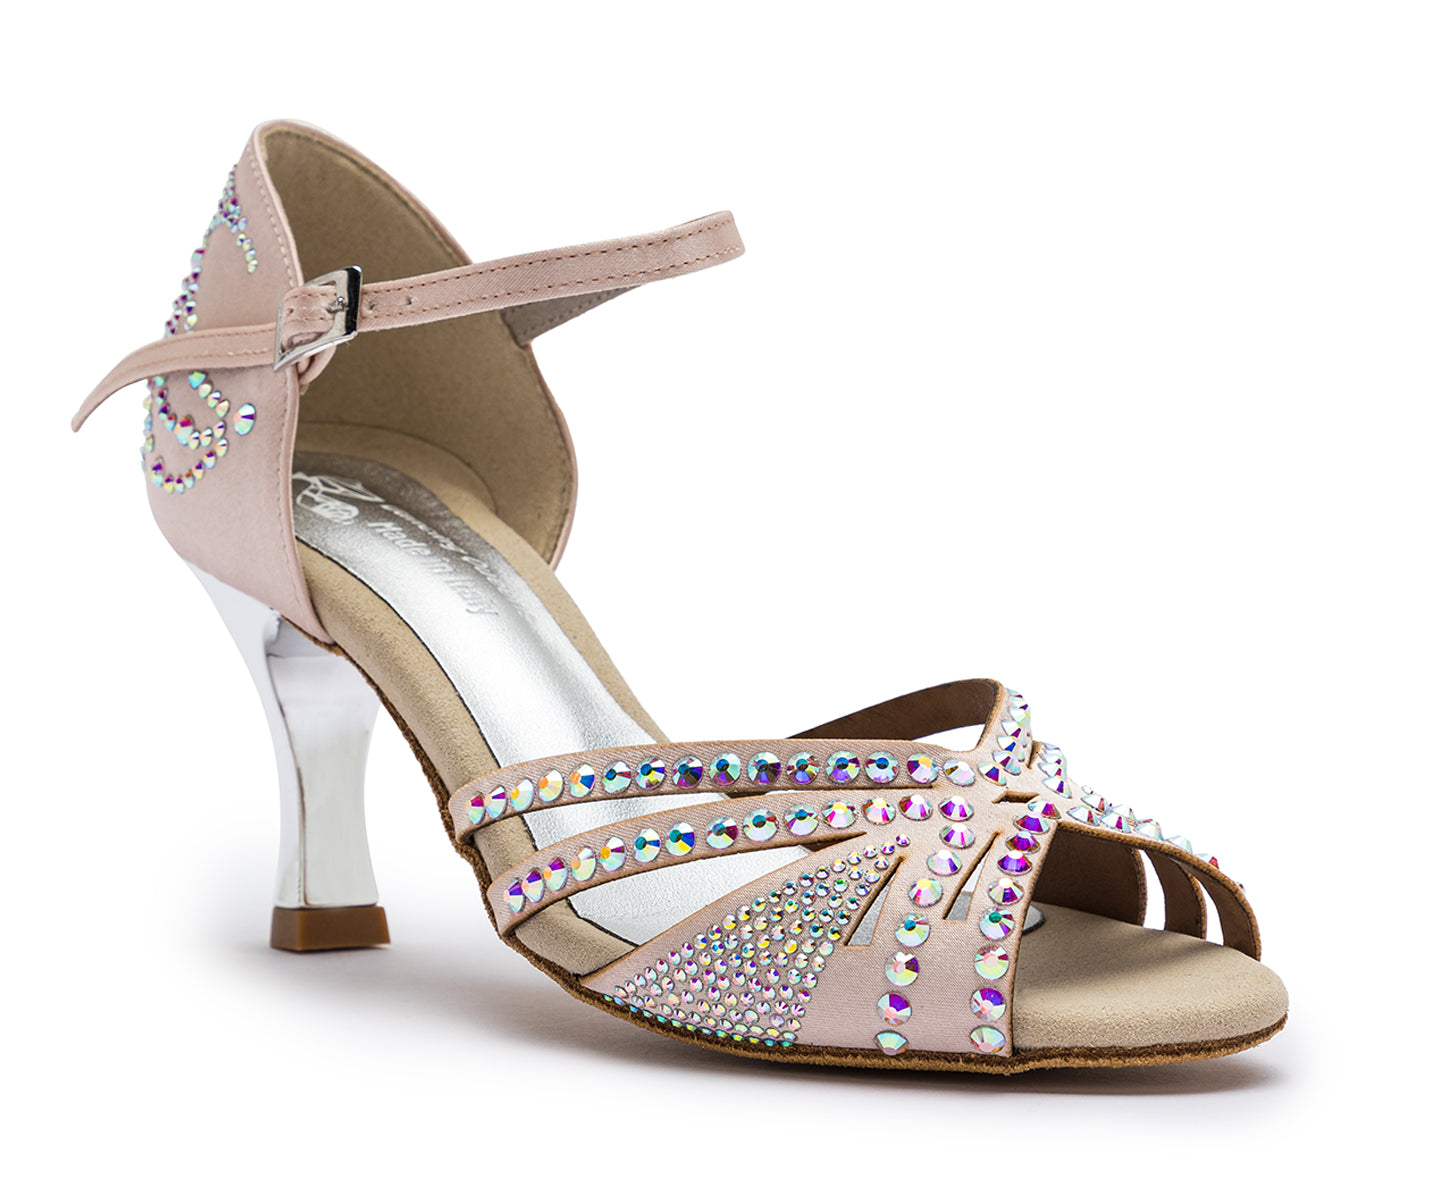 Zapatos de baile dq l3m en rosé cipria con diamantes de imitación